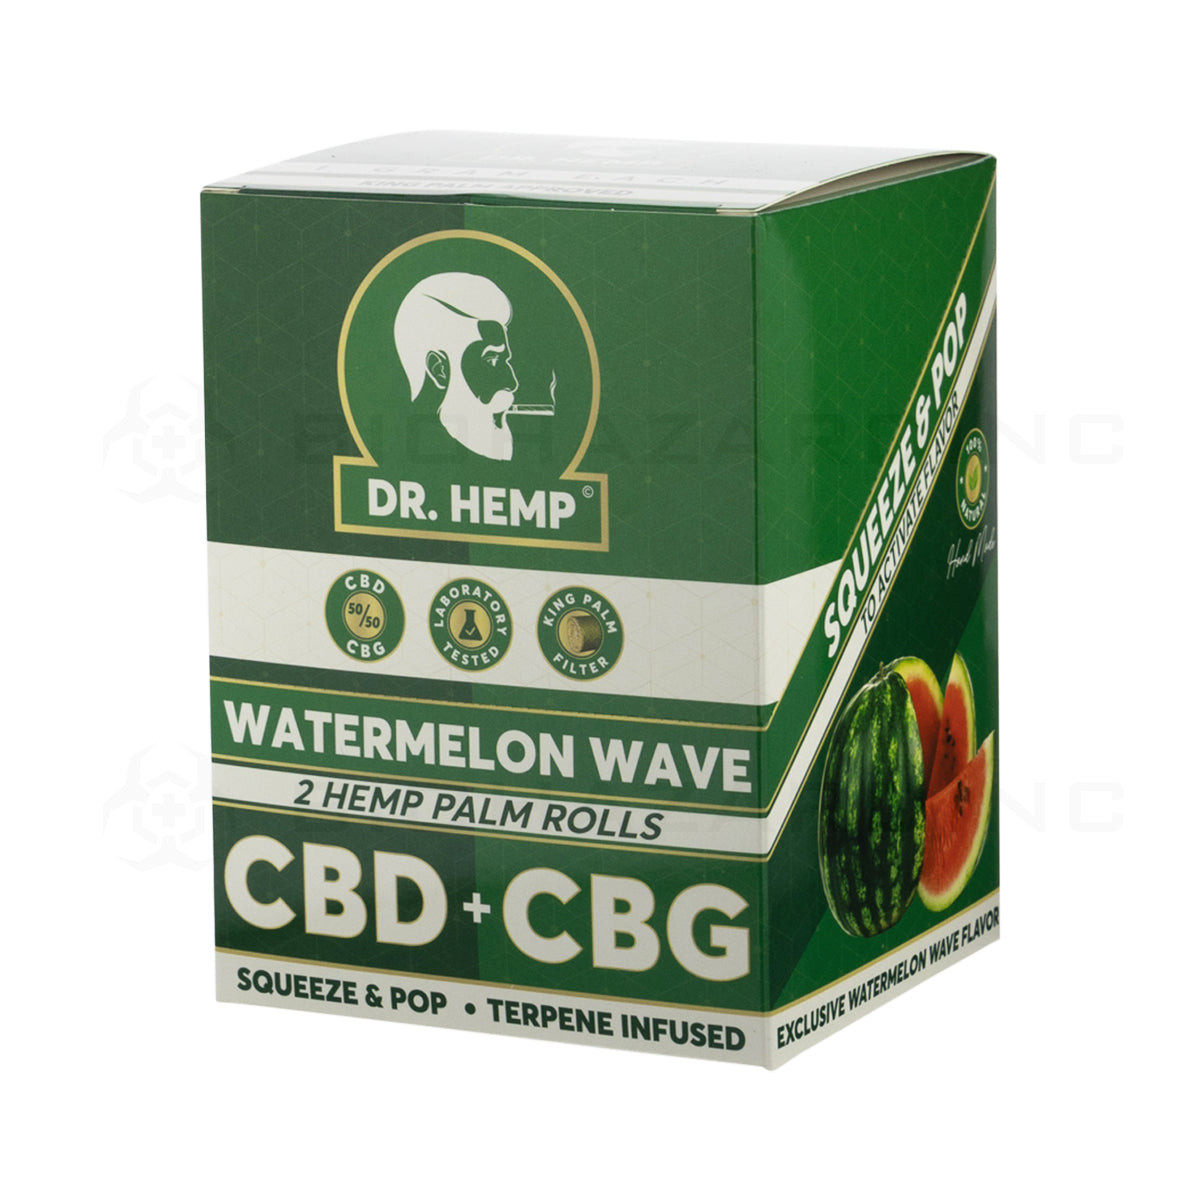 DR. Hemp©️ x King Palm™ | CBD + CBG Pre-Rolls Various Flavors | Organic Hemp Palm - 20 Count Hemp Wraps Biohazard Inc Watermelon Wave  